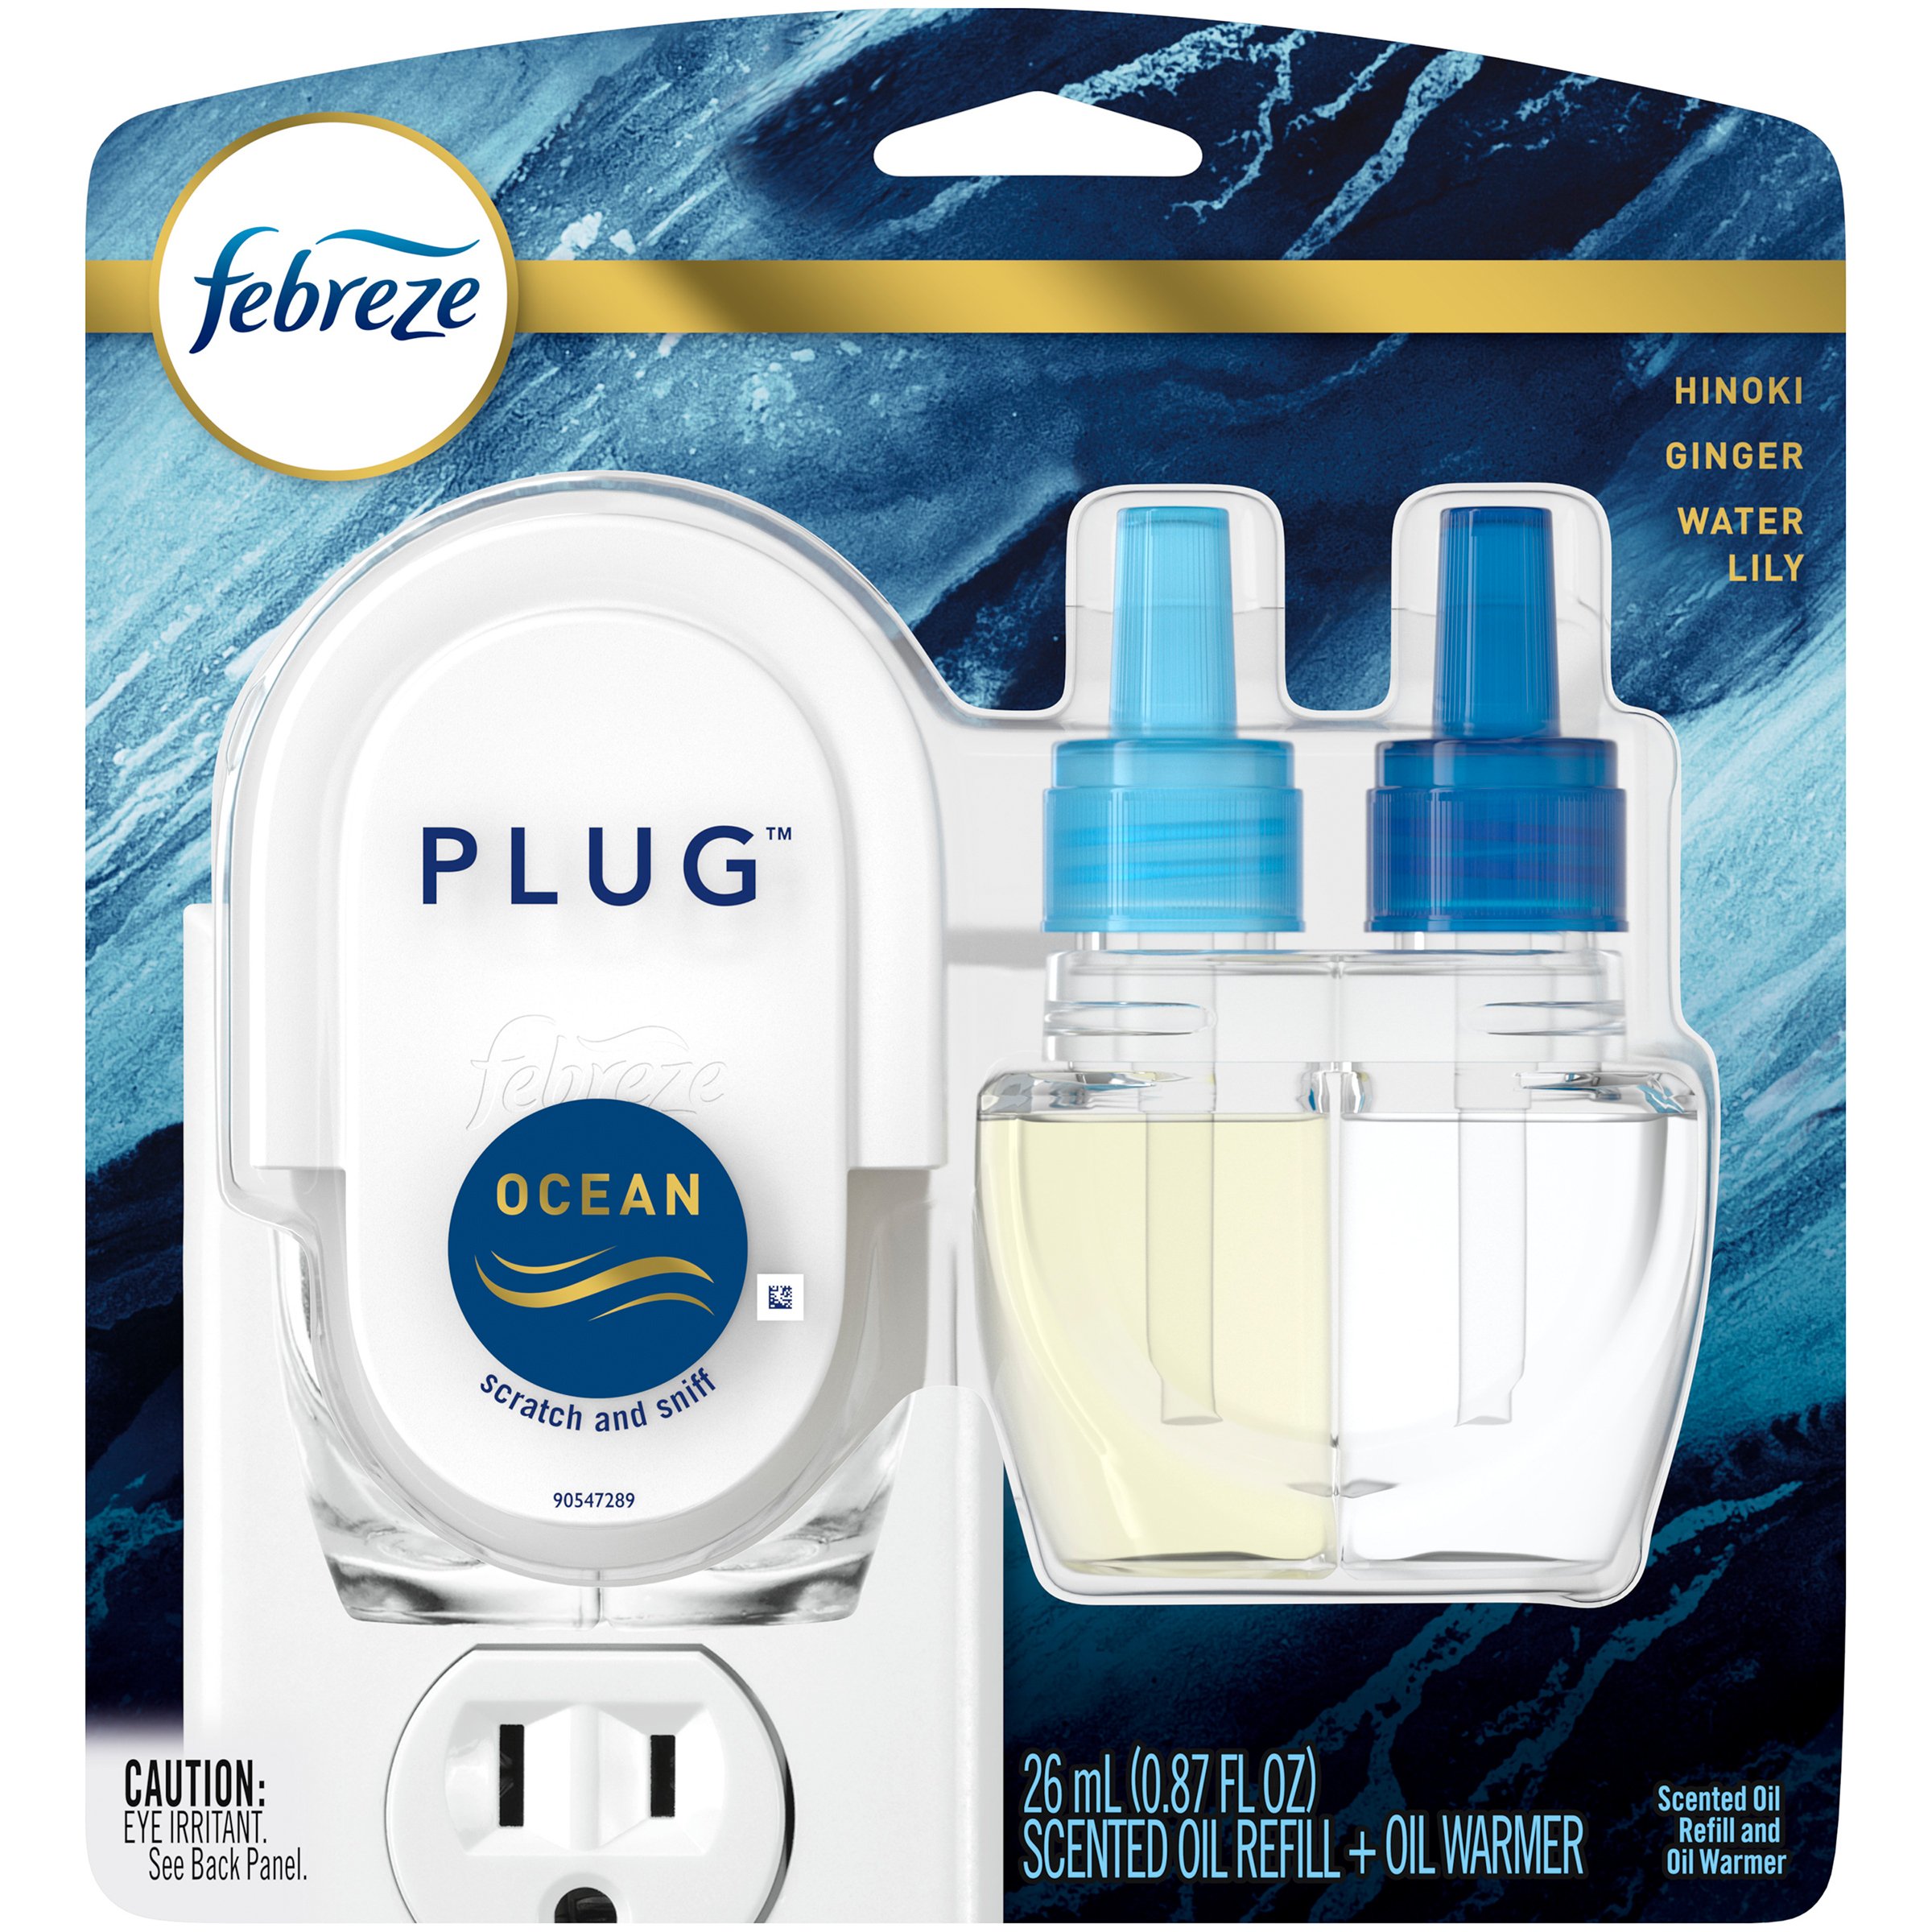 Febreze Plug Ocean Starter Kit - Shop Scented Oils & Wax at H-E-B